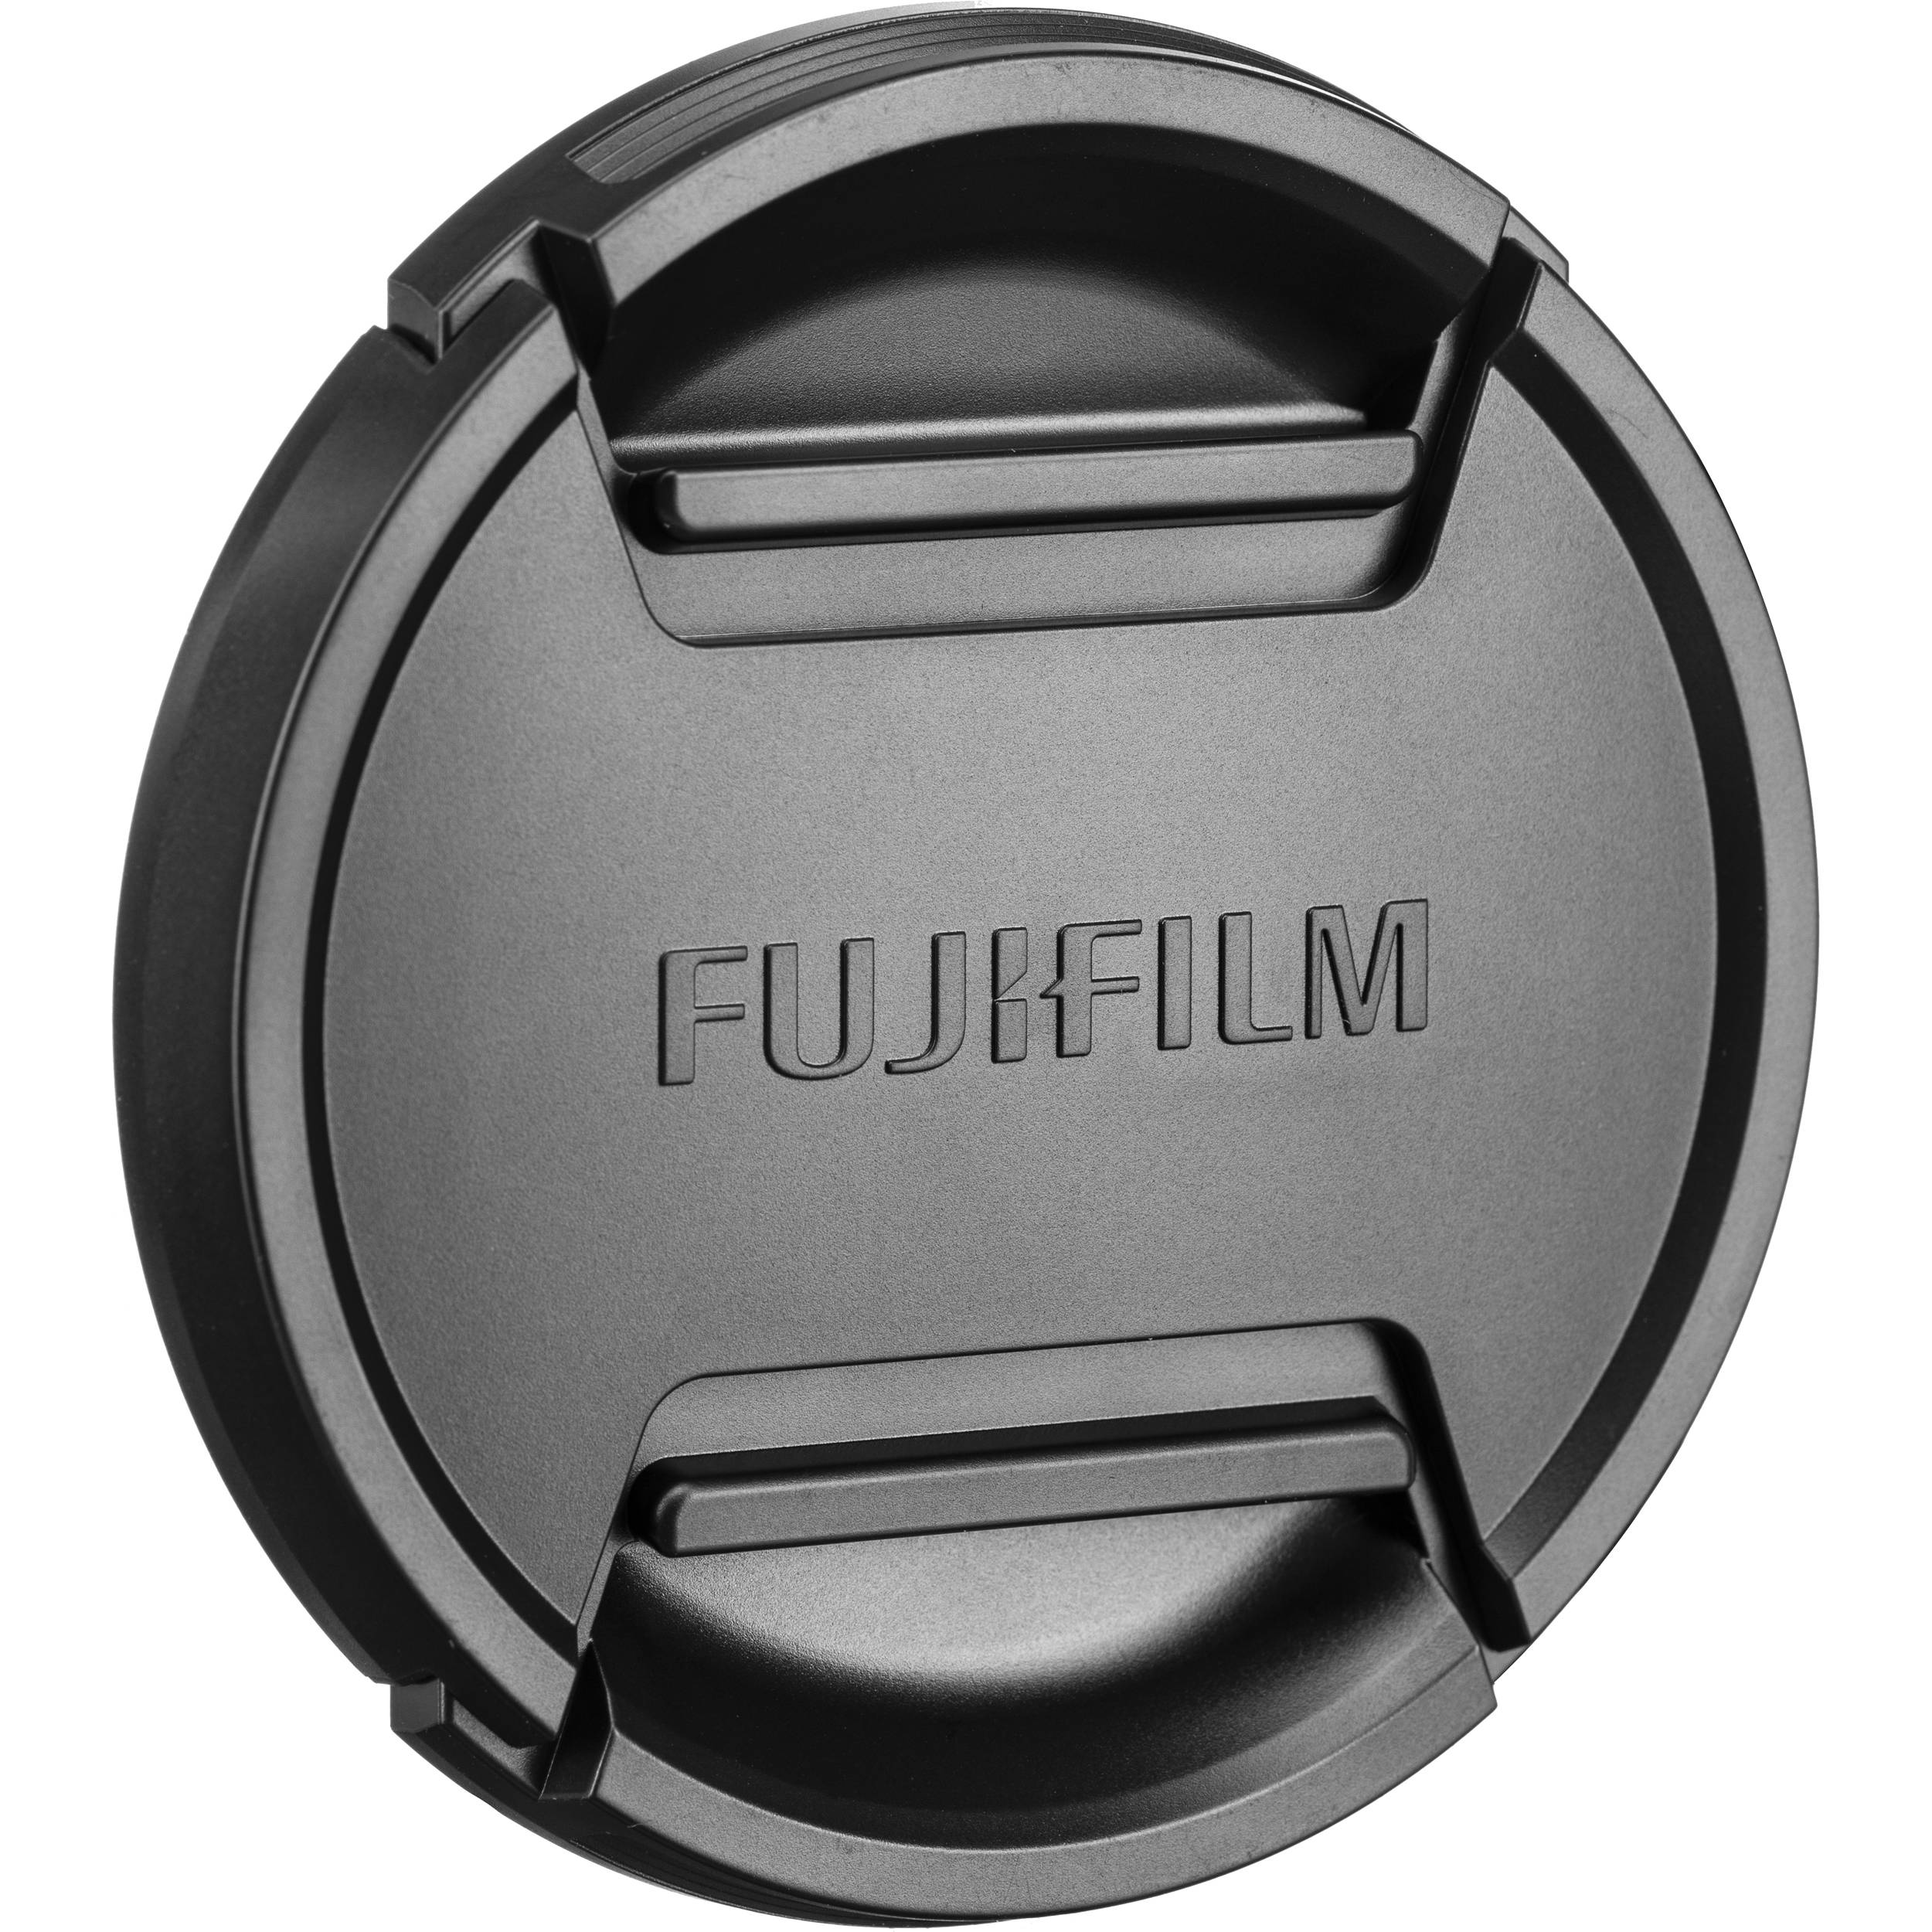 FUJIFILM 52mm Lens Cap II Fujifilm Front Lens Cap